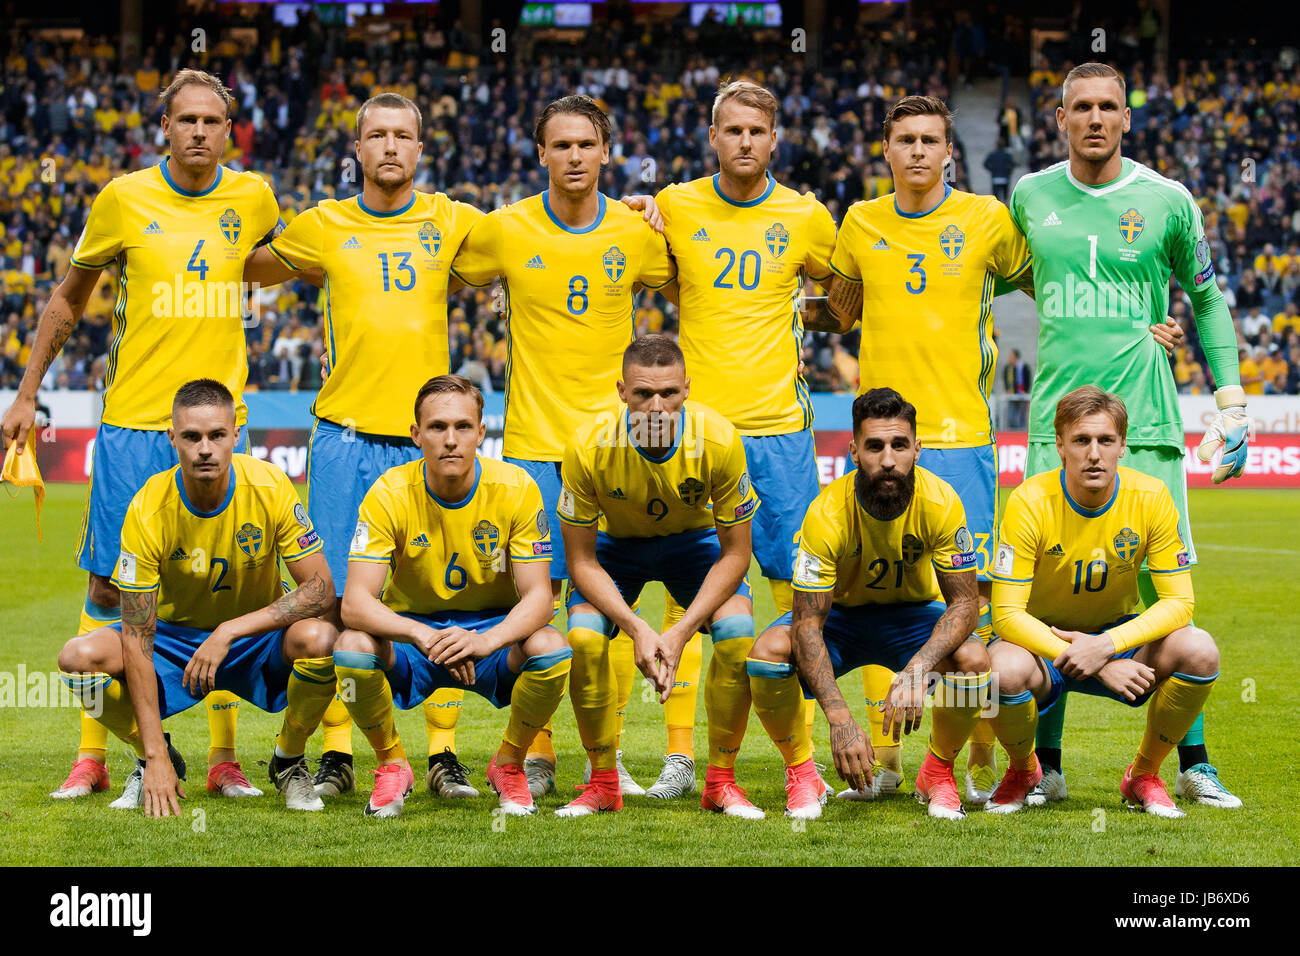 Stockholm, Sweden. 9th june, 2017. Sweden first team in the qualifying game between Sweden and France. Credit: Goran Johansson/Frilansfotograferna/Alamy Live News Stock Photo